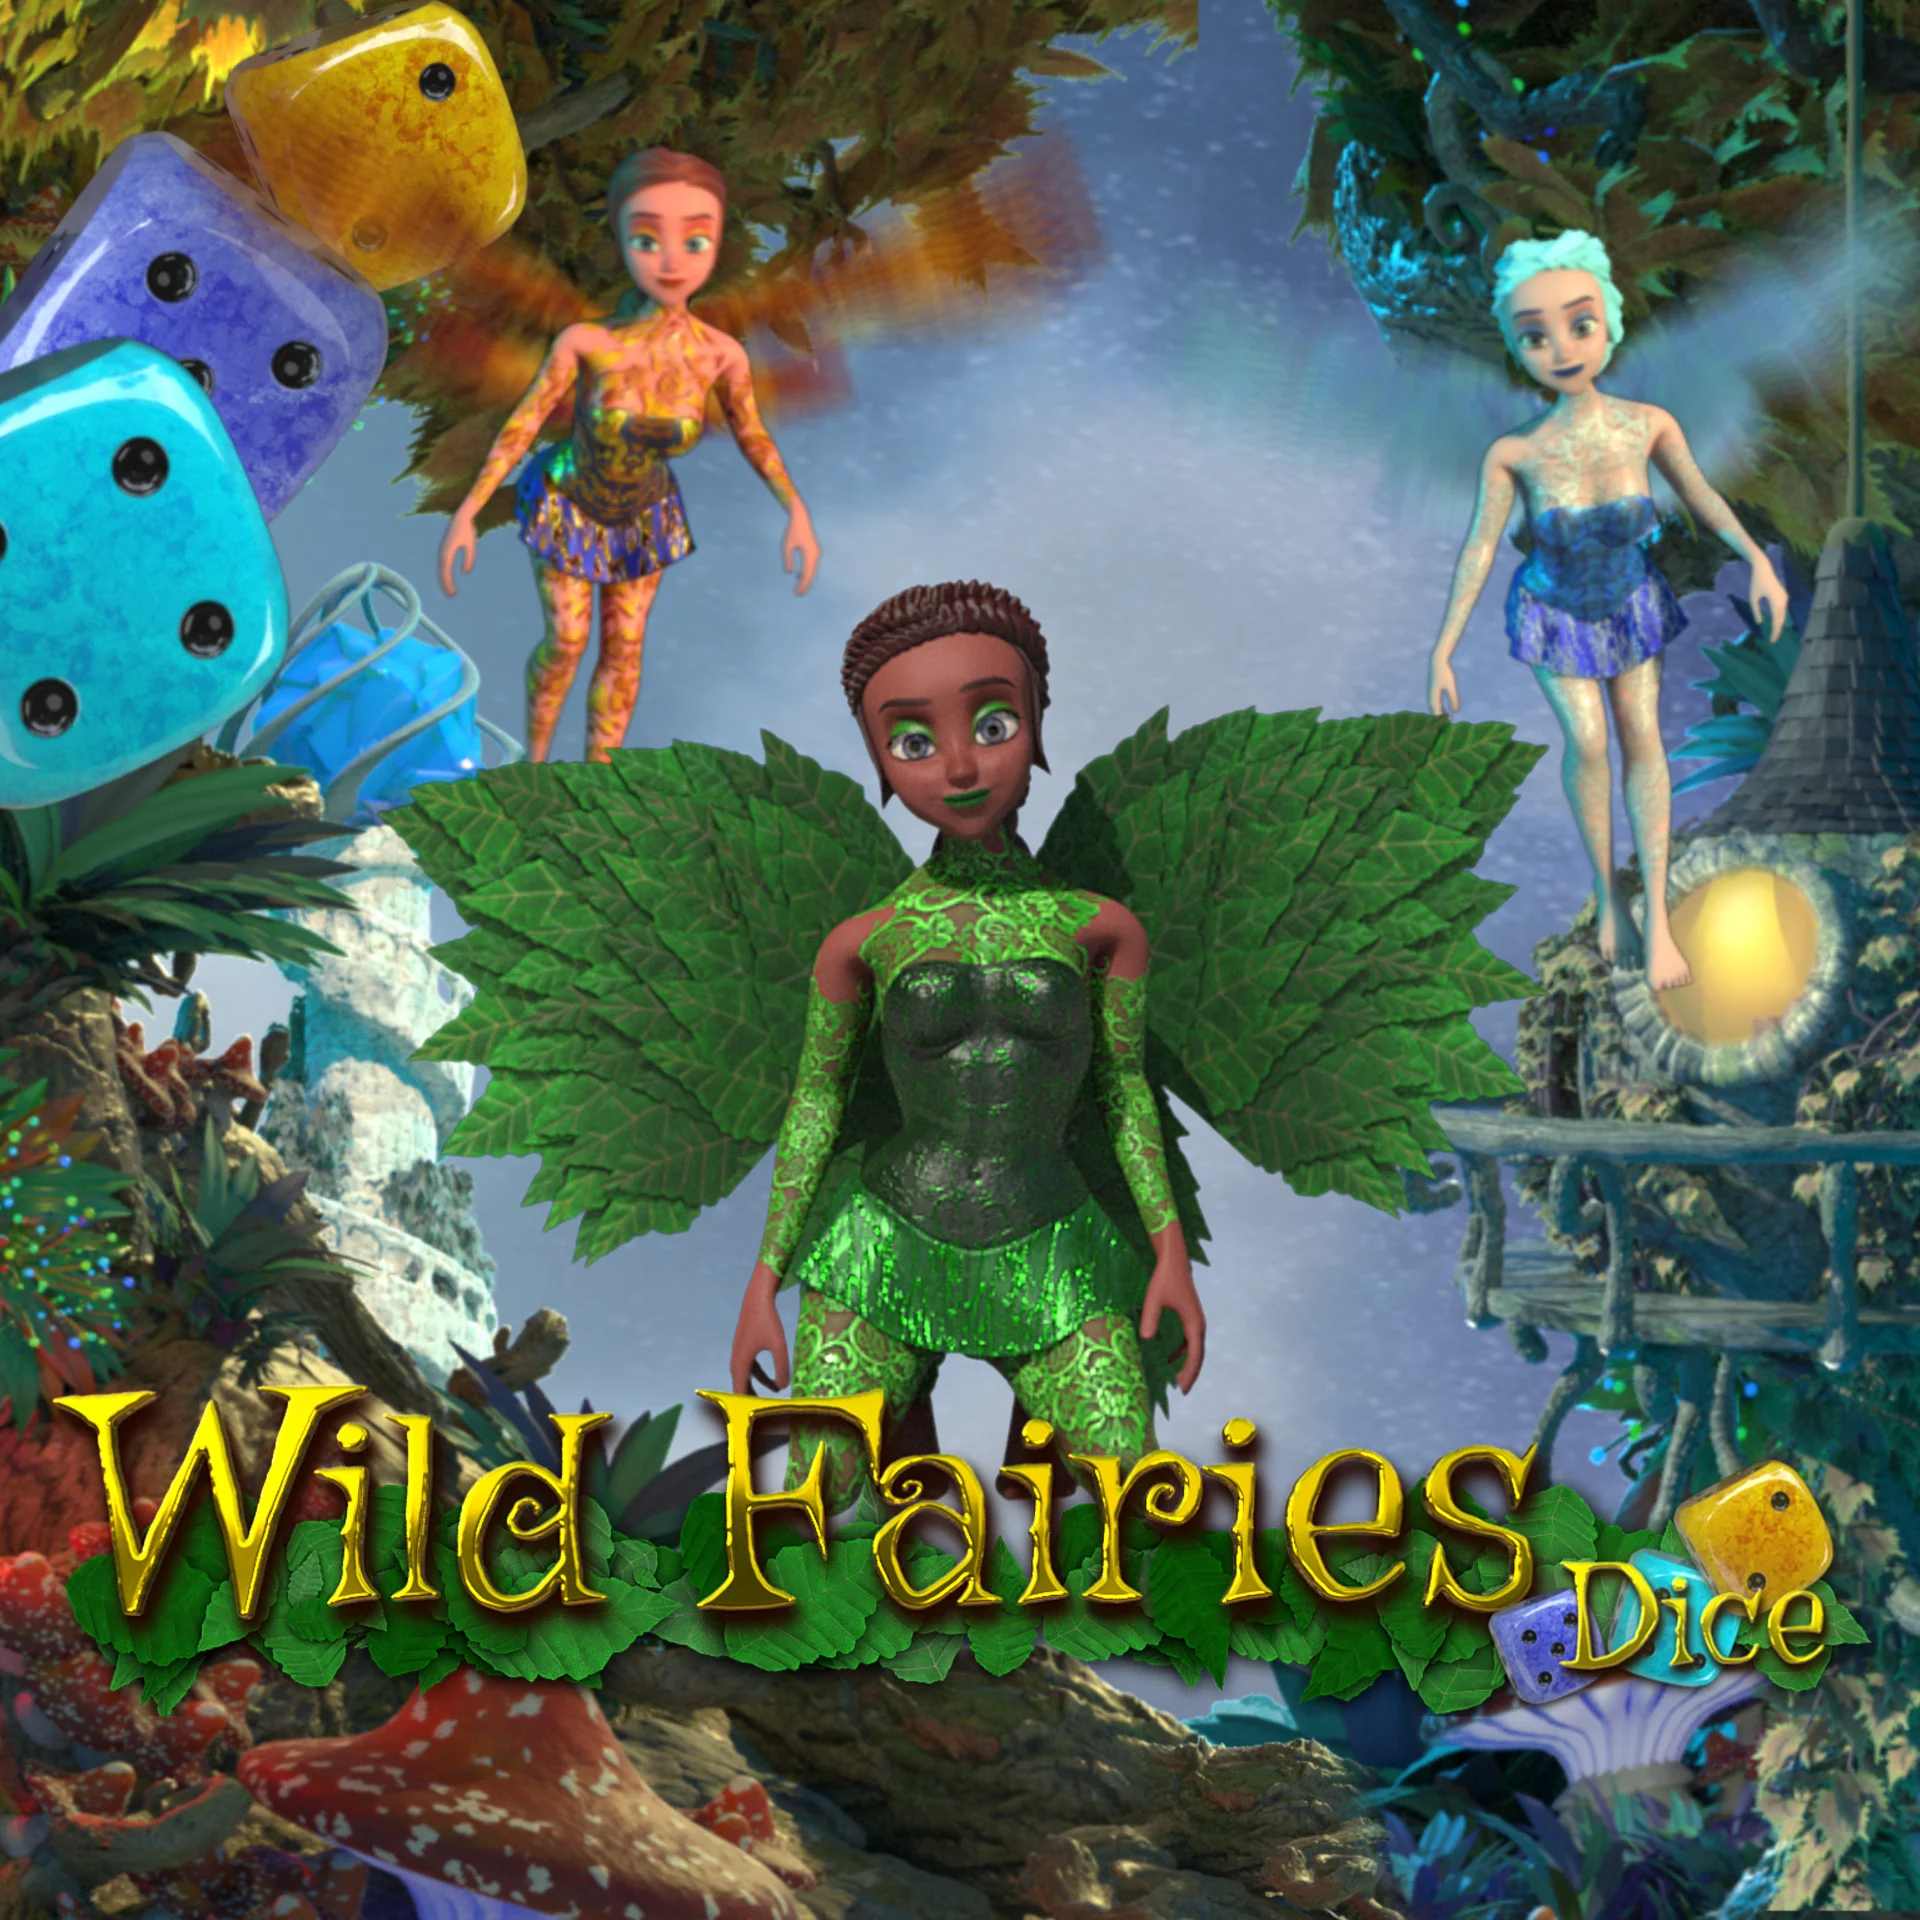 Play Wild Fairies Dice on Starcasinodice online casino